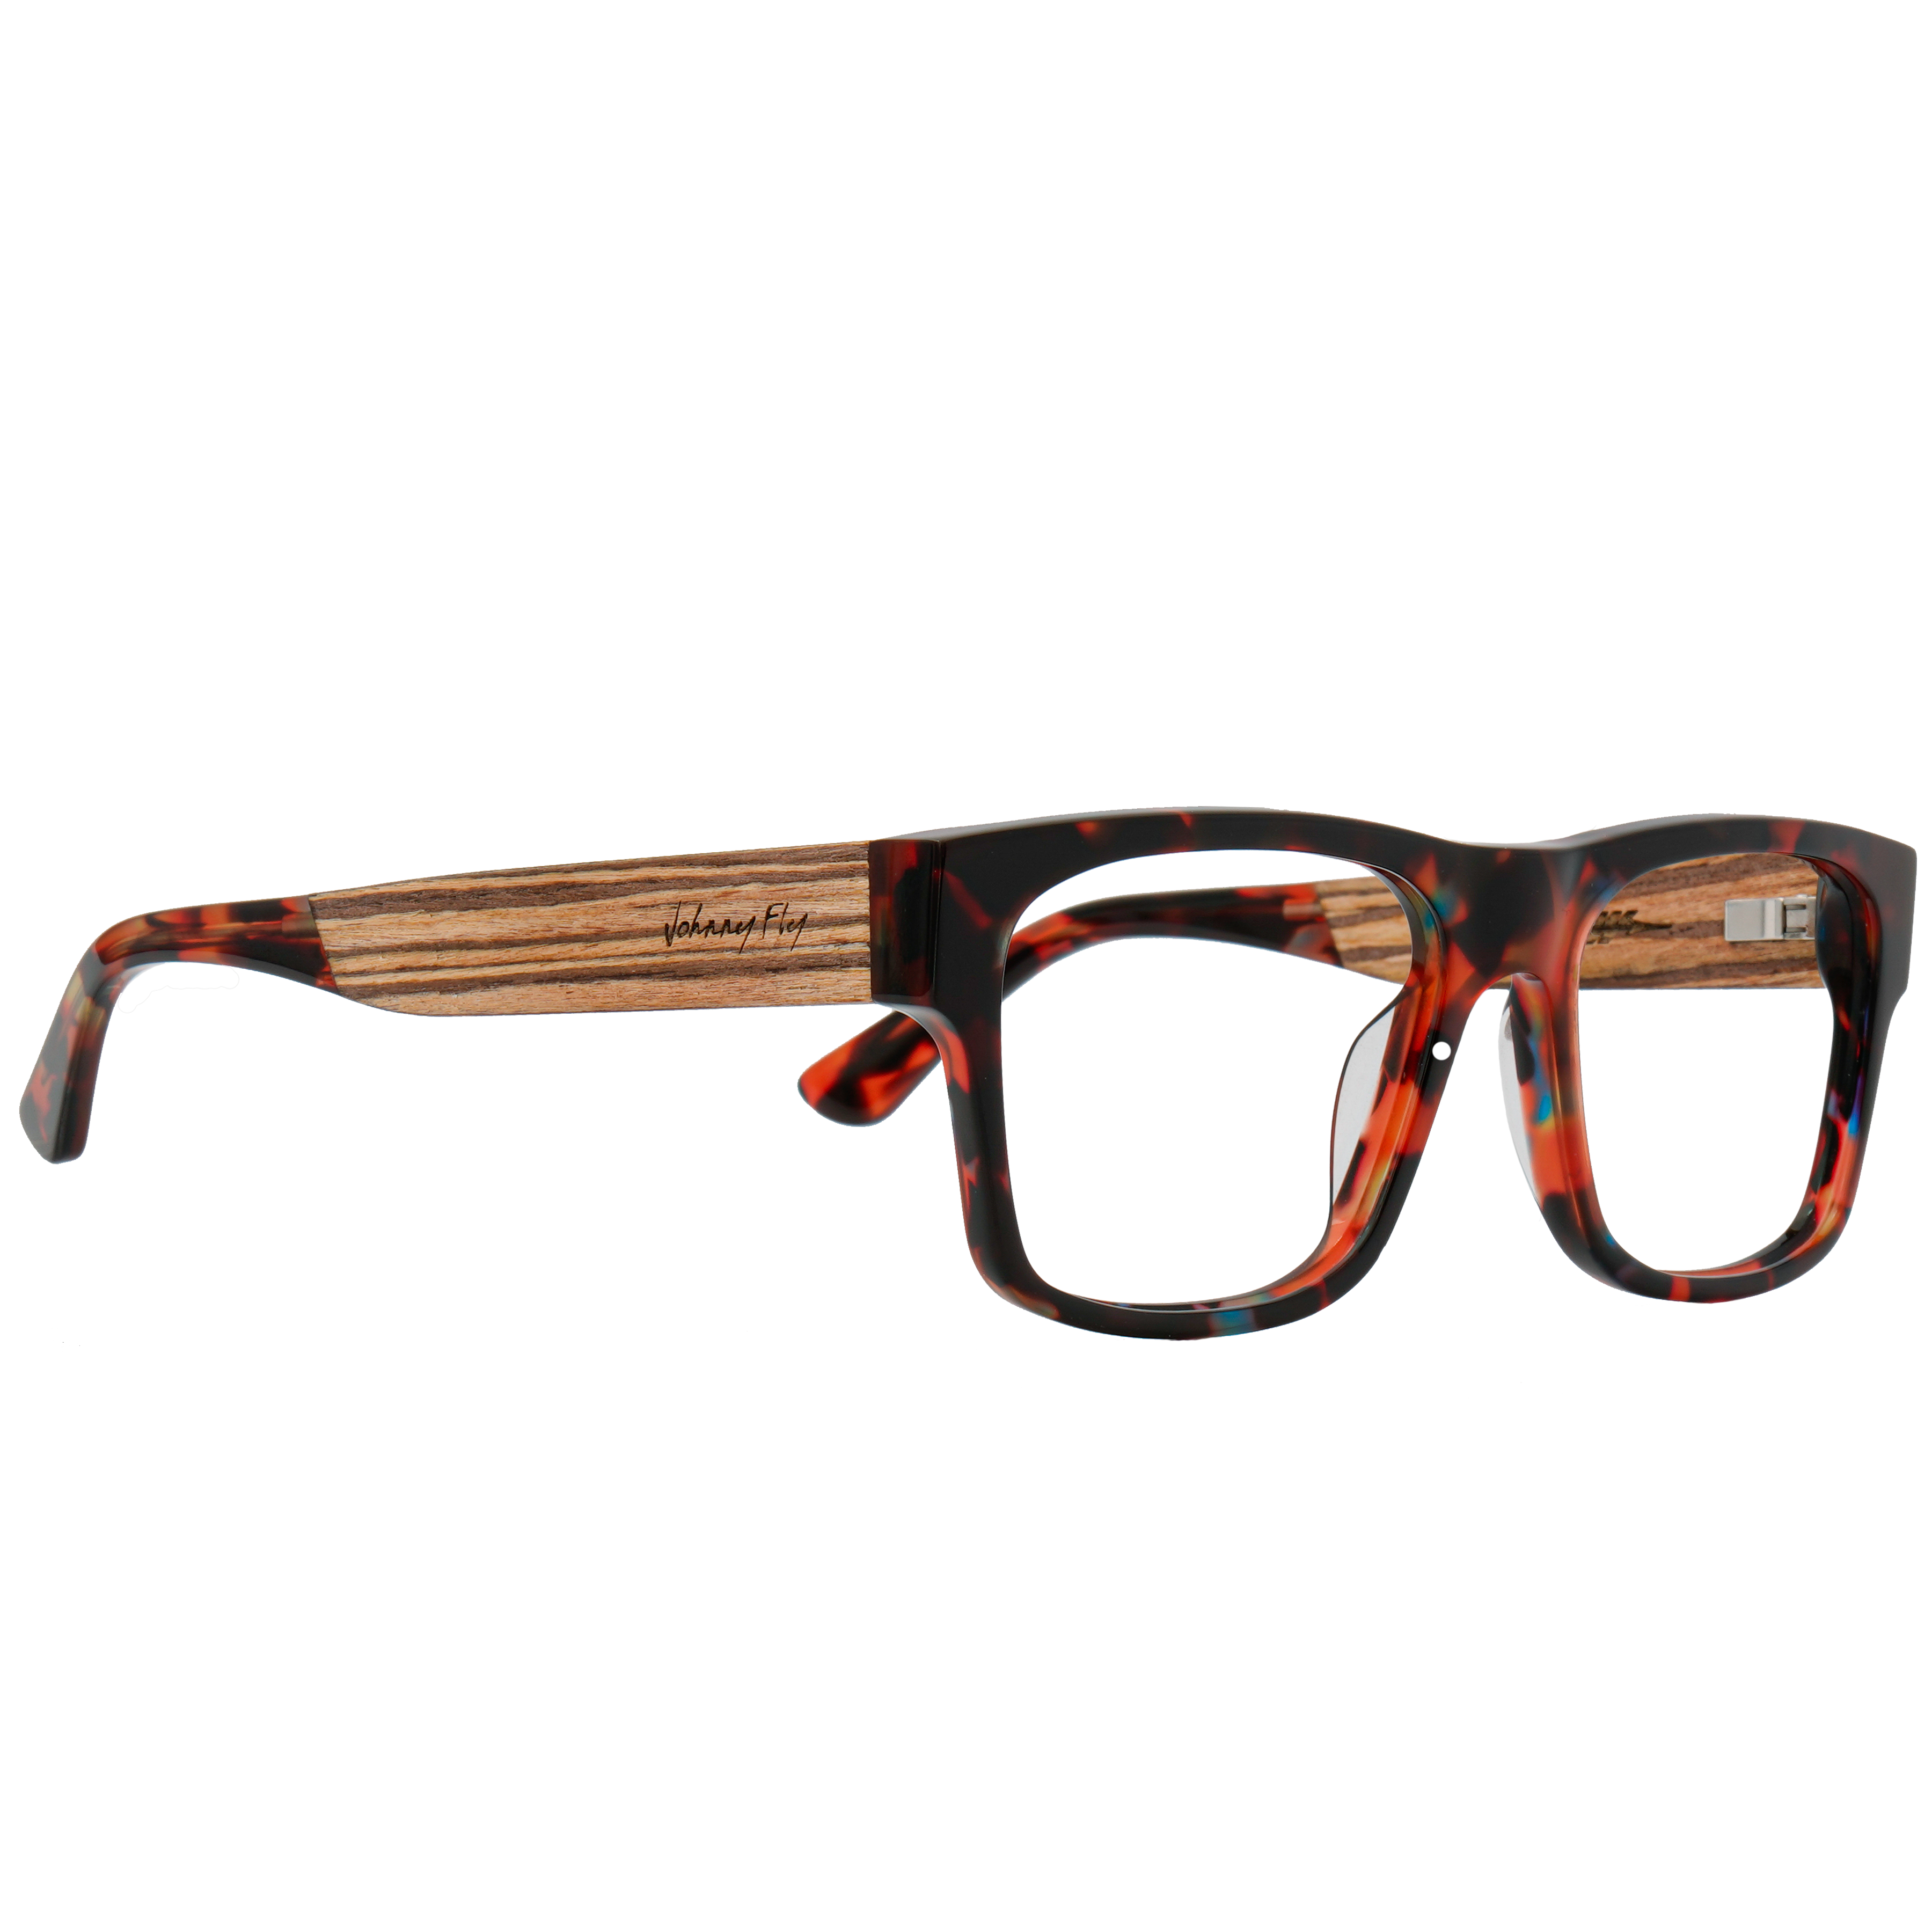 ARROW Frame - Space - Eyeglasses Frame - Johnny Fly Eyewear | 